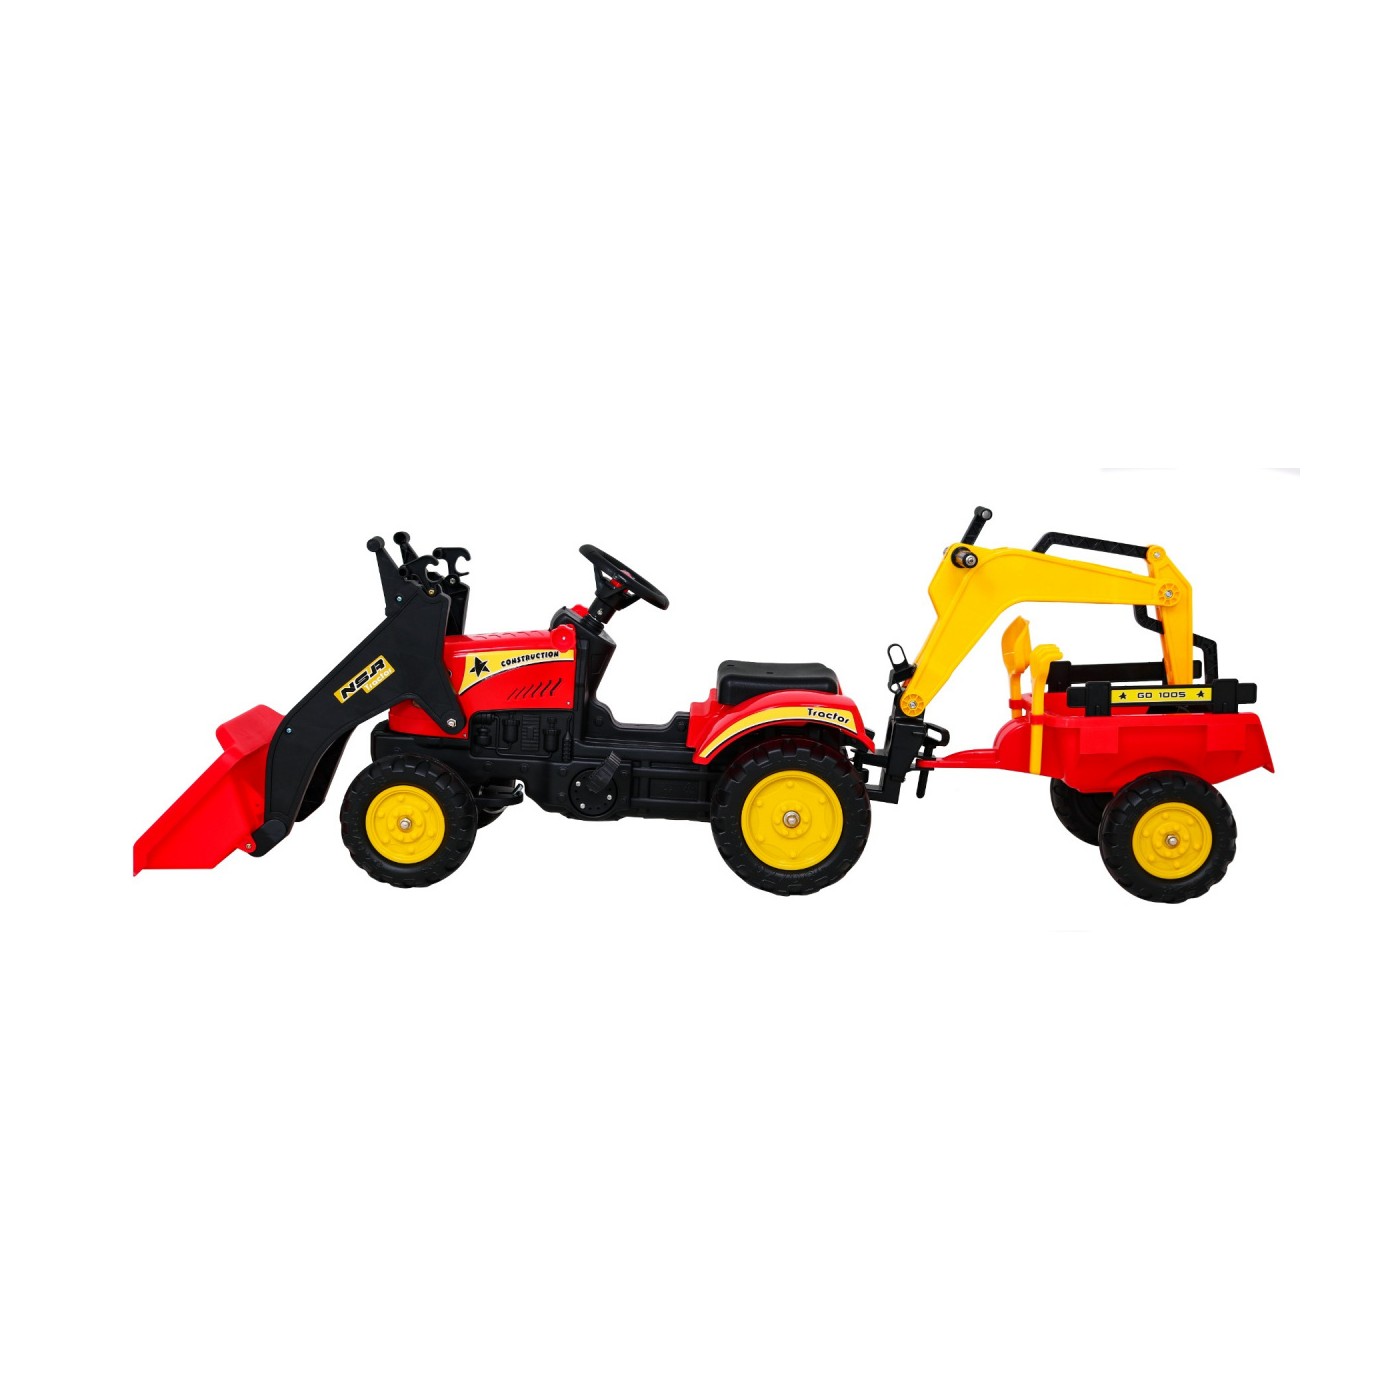 Go-kart Tractor Excavator with Trailer + Accessories